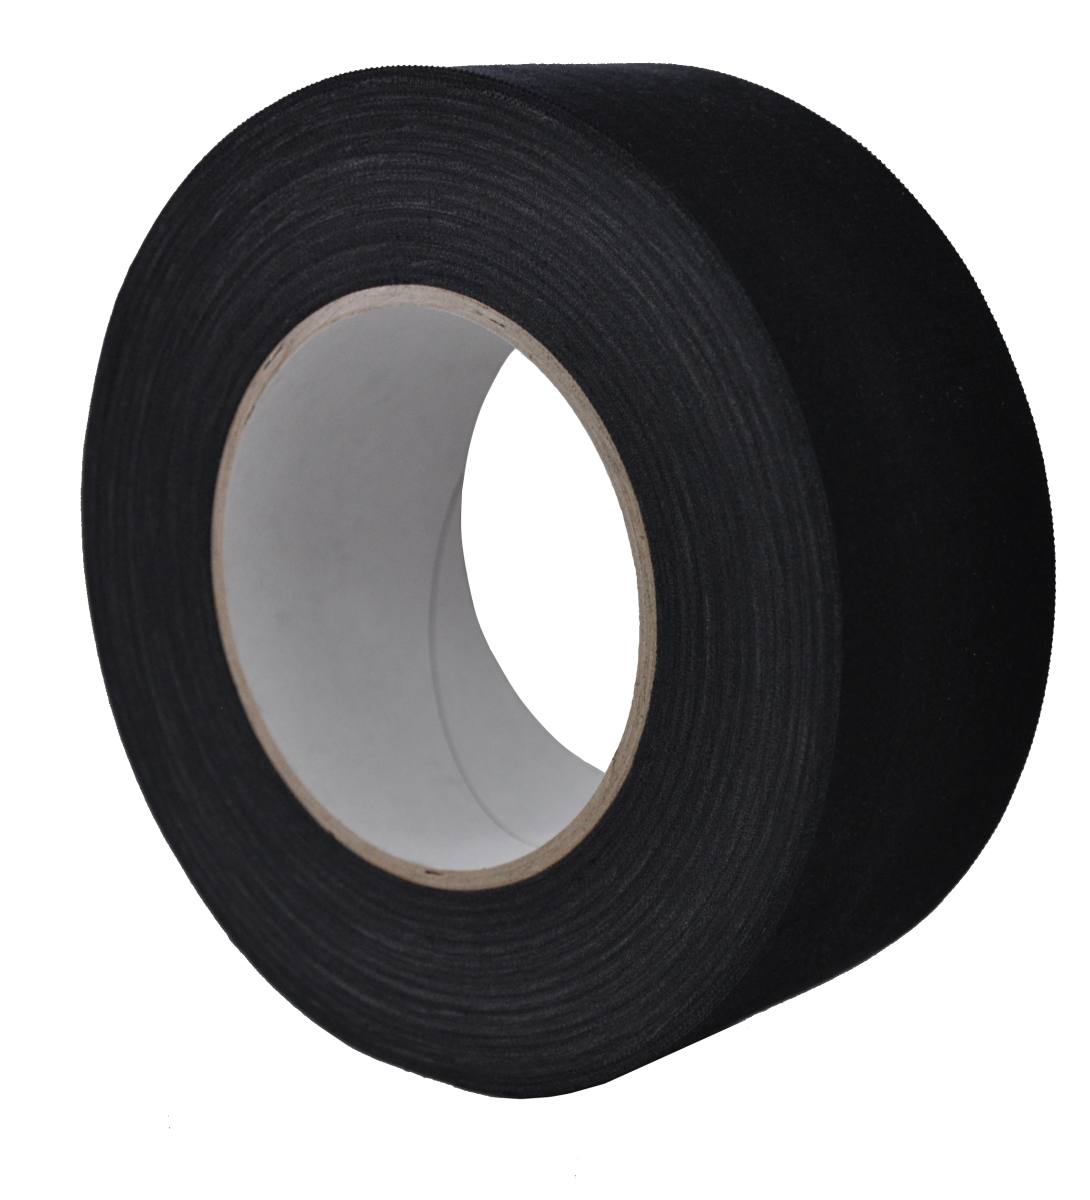 S-K-S 970 Raw fabric adhesive tape, 38 mm x 50 m, black, 0.240 mm